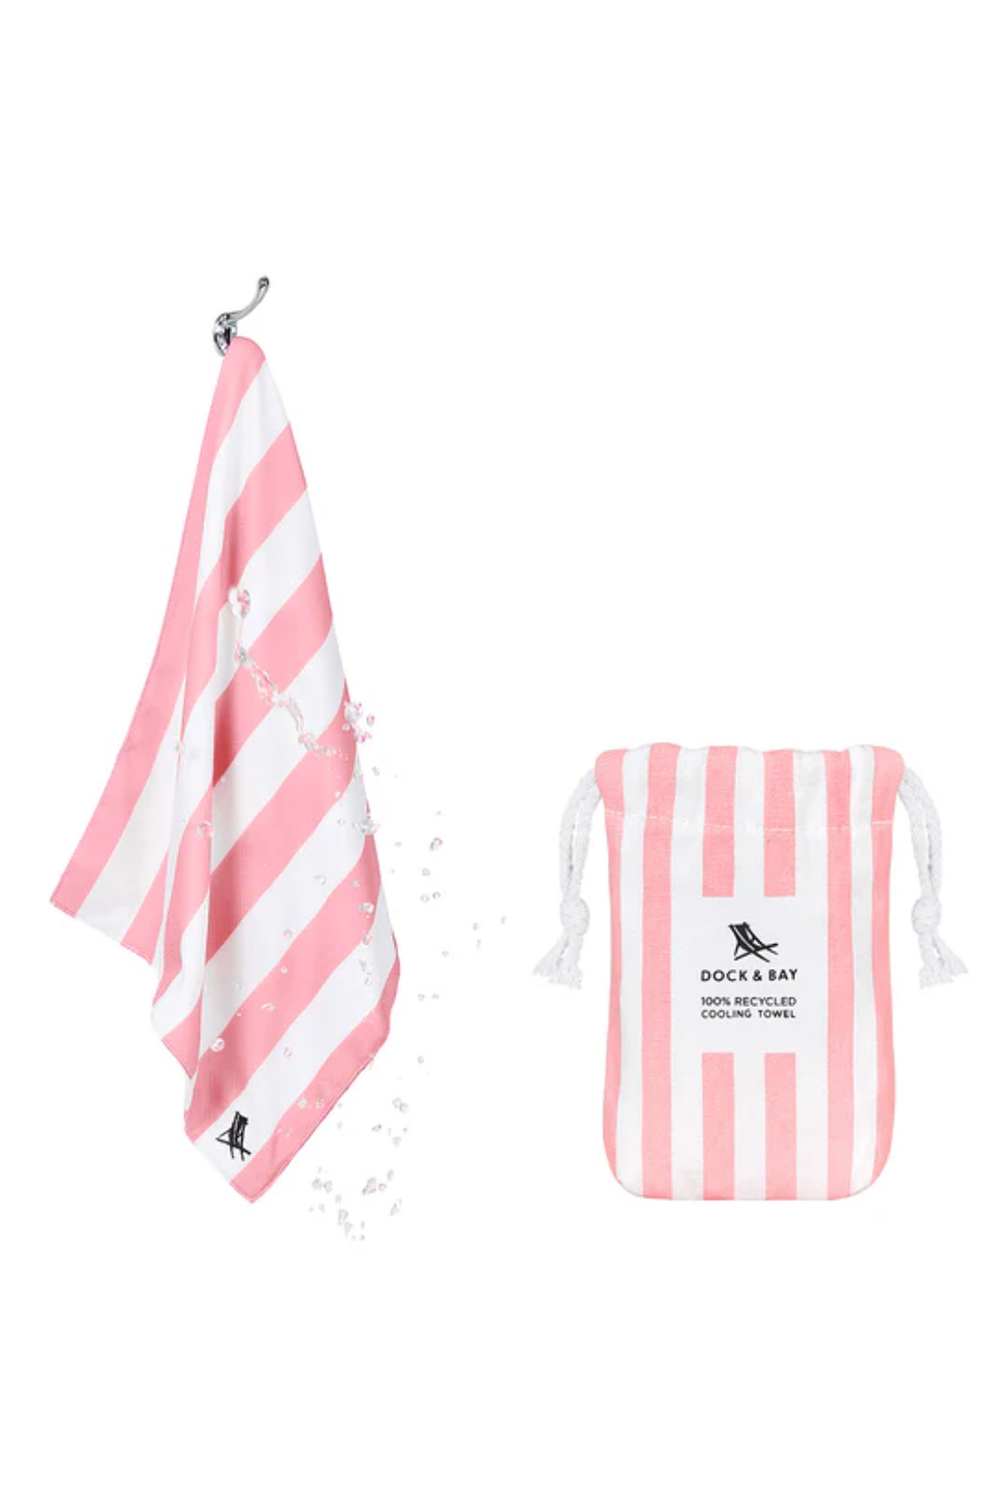 Quick Dry Gym / Cooling Towel - Malibu Pink